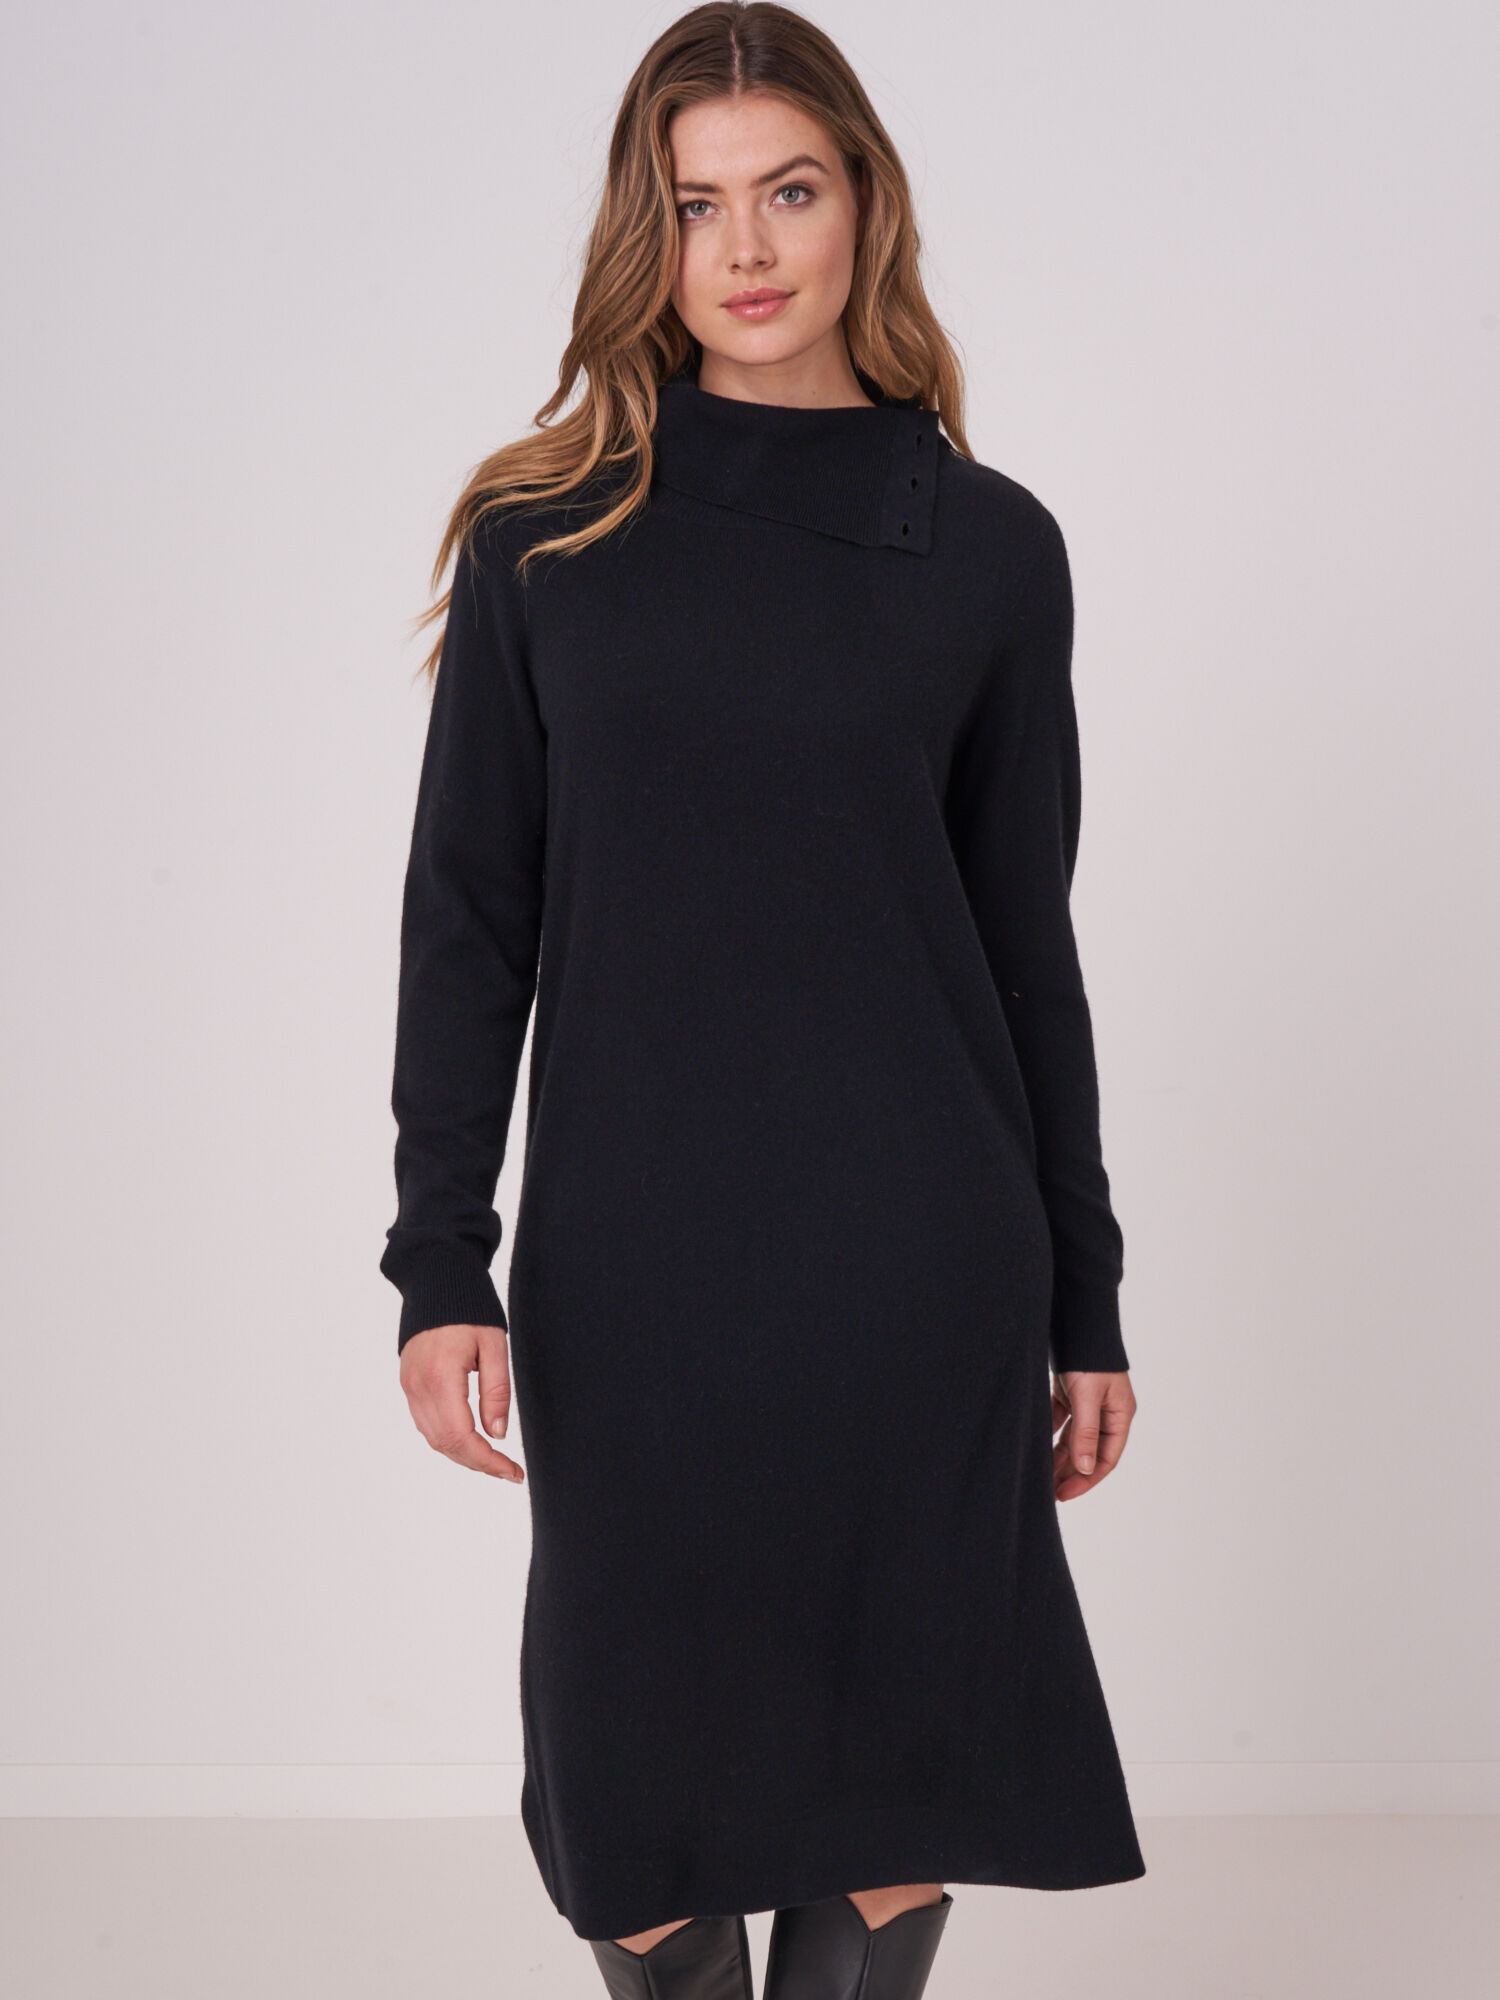 Fine knit cashmere blend dress with buttoned turtleneck